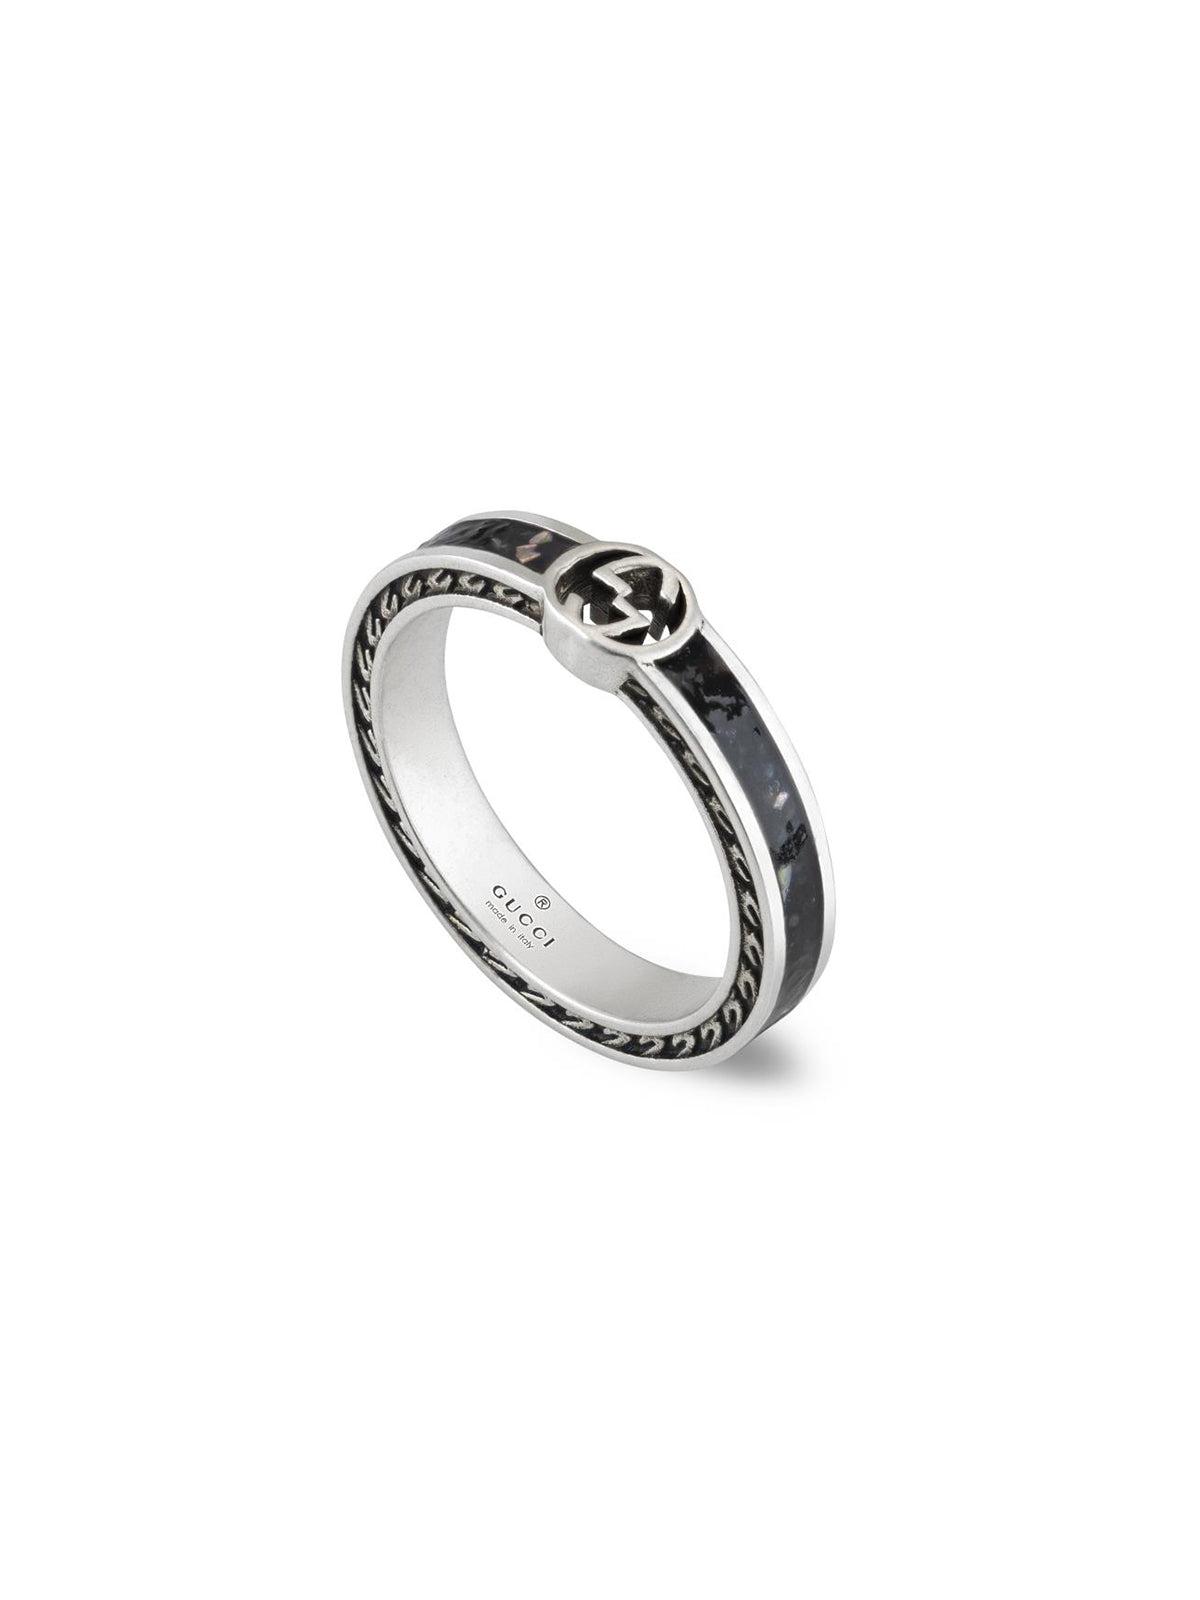 Gucci Interlocking Ring in Silver - Size 13